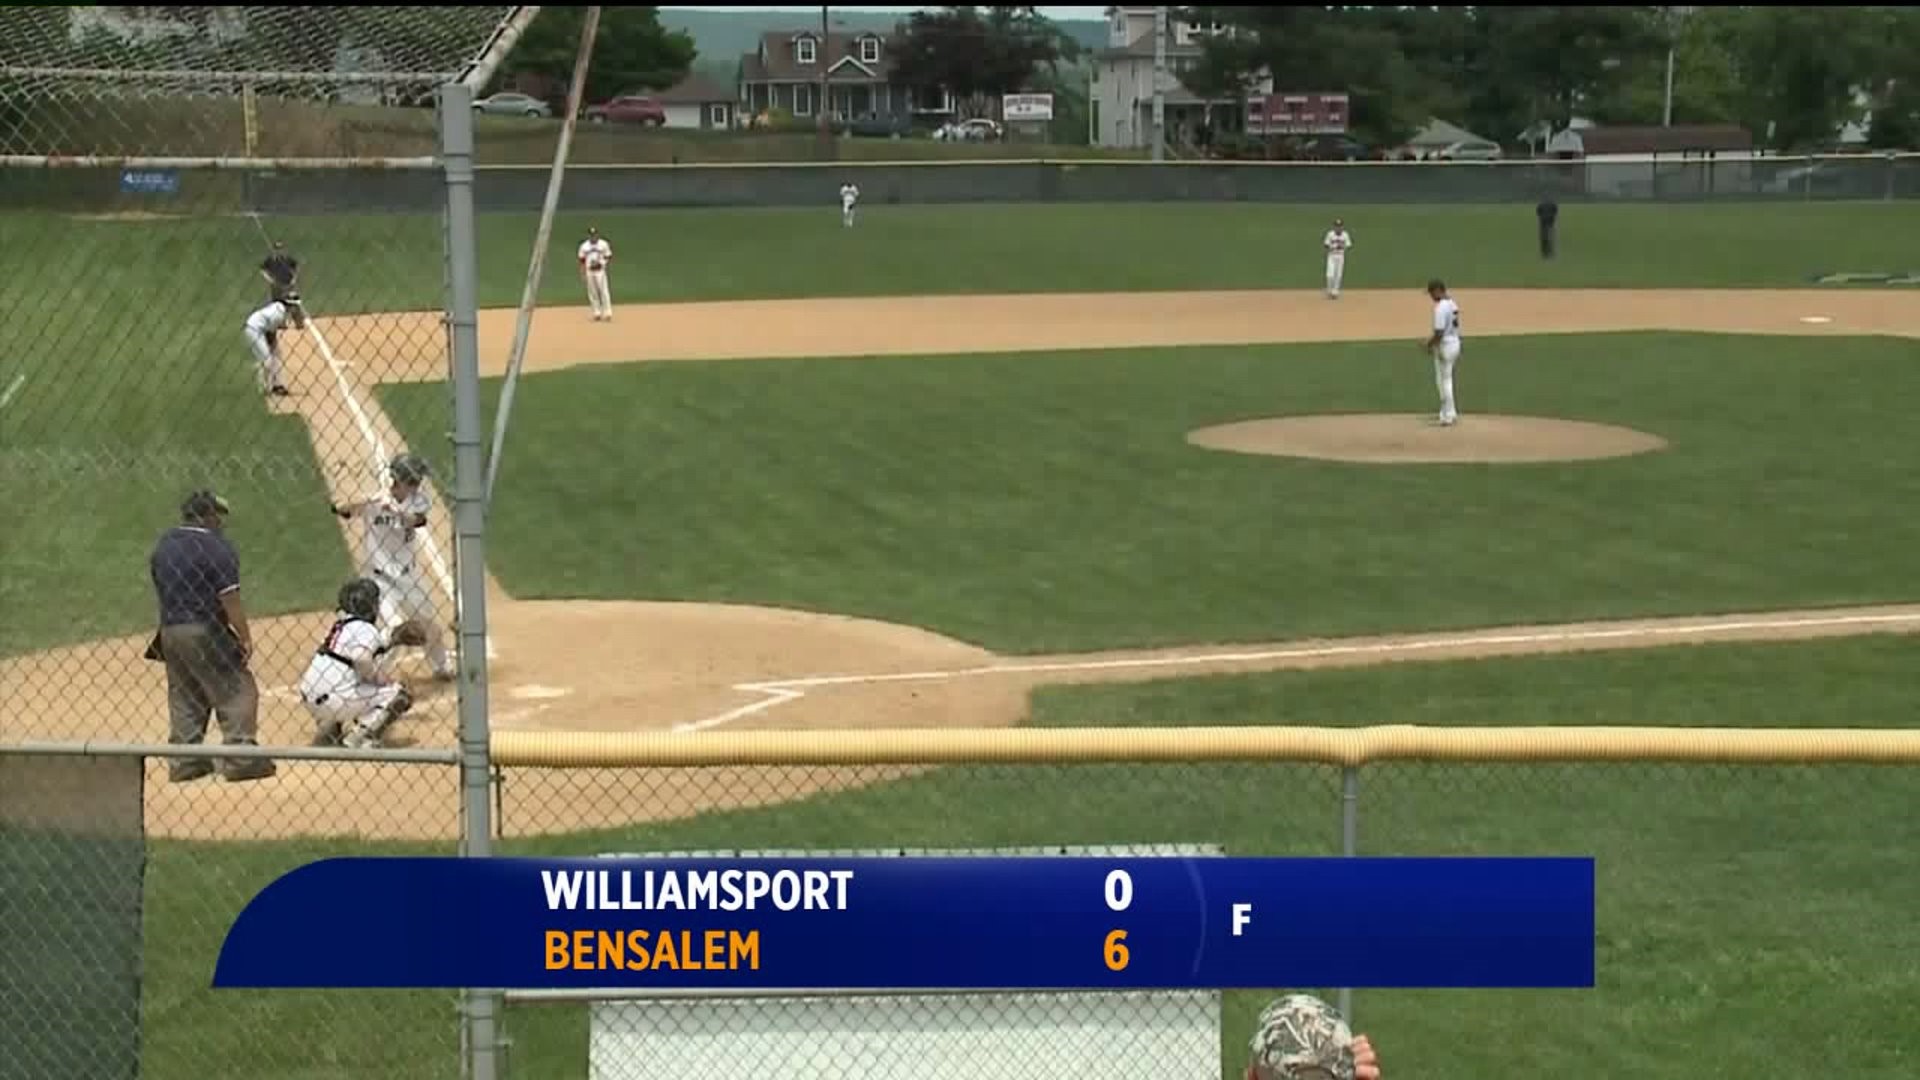 Wiliamsport Bensalem baseball